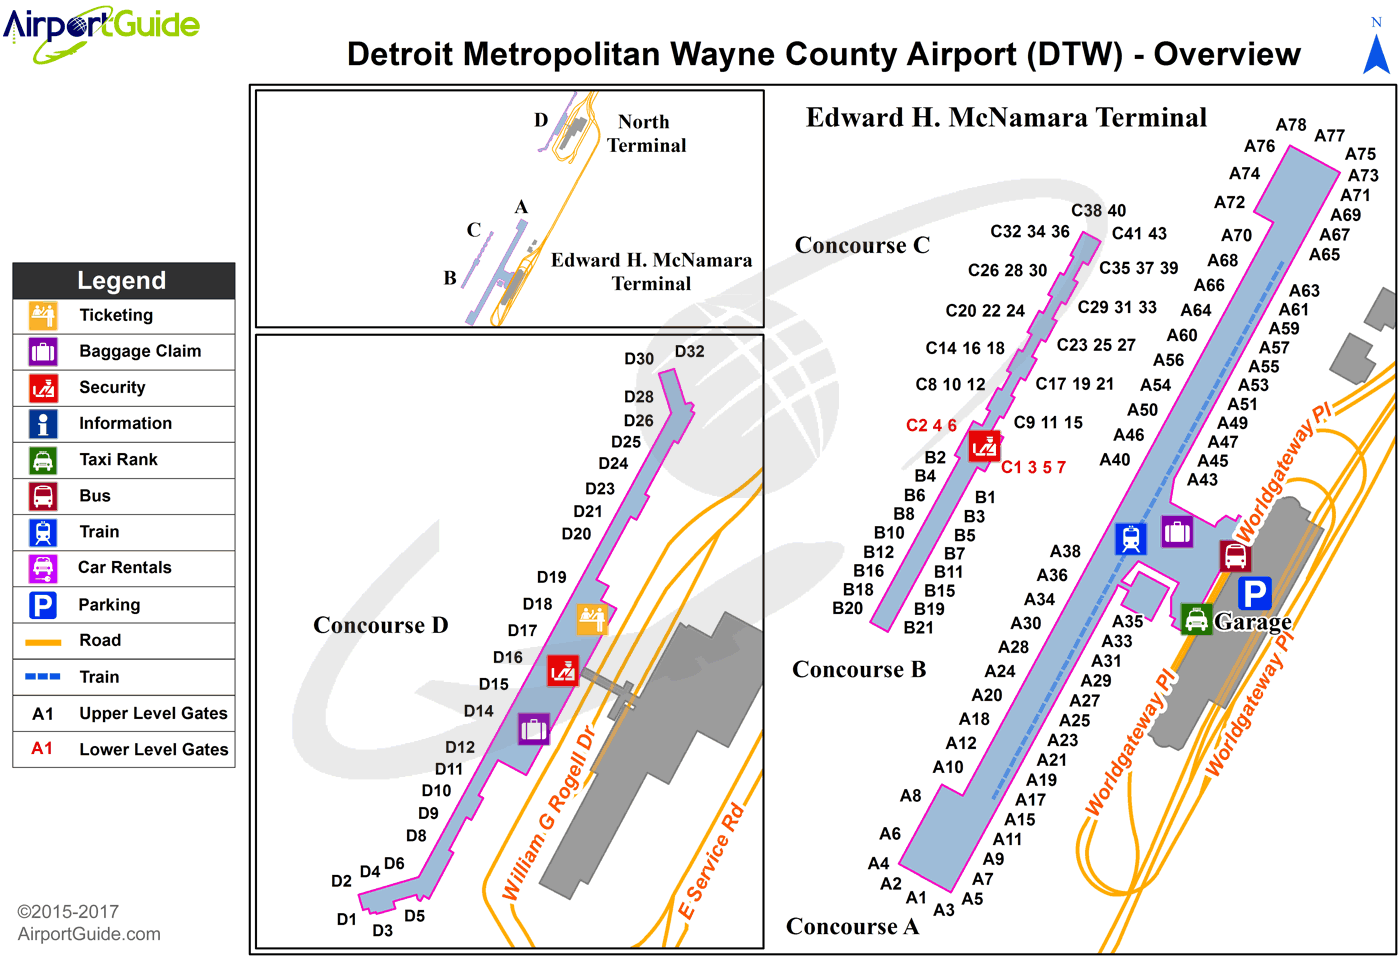 Detroit - Napoleon (DTW) Airport Terminal Map - Overview